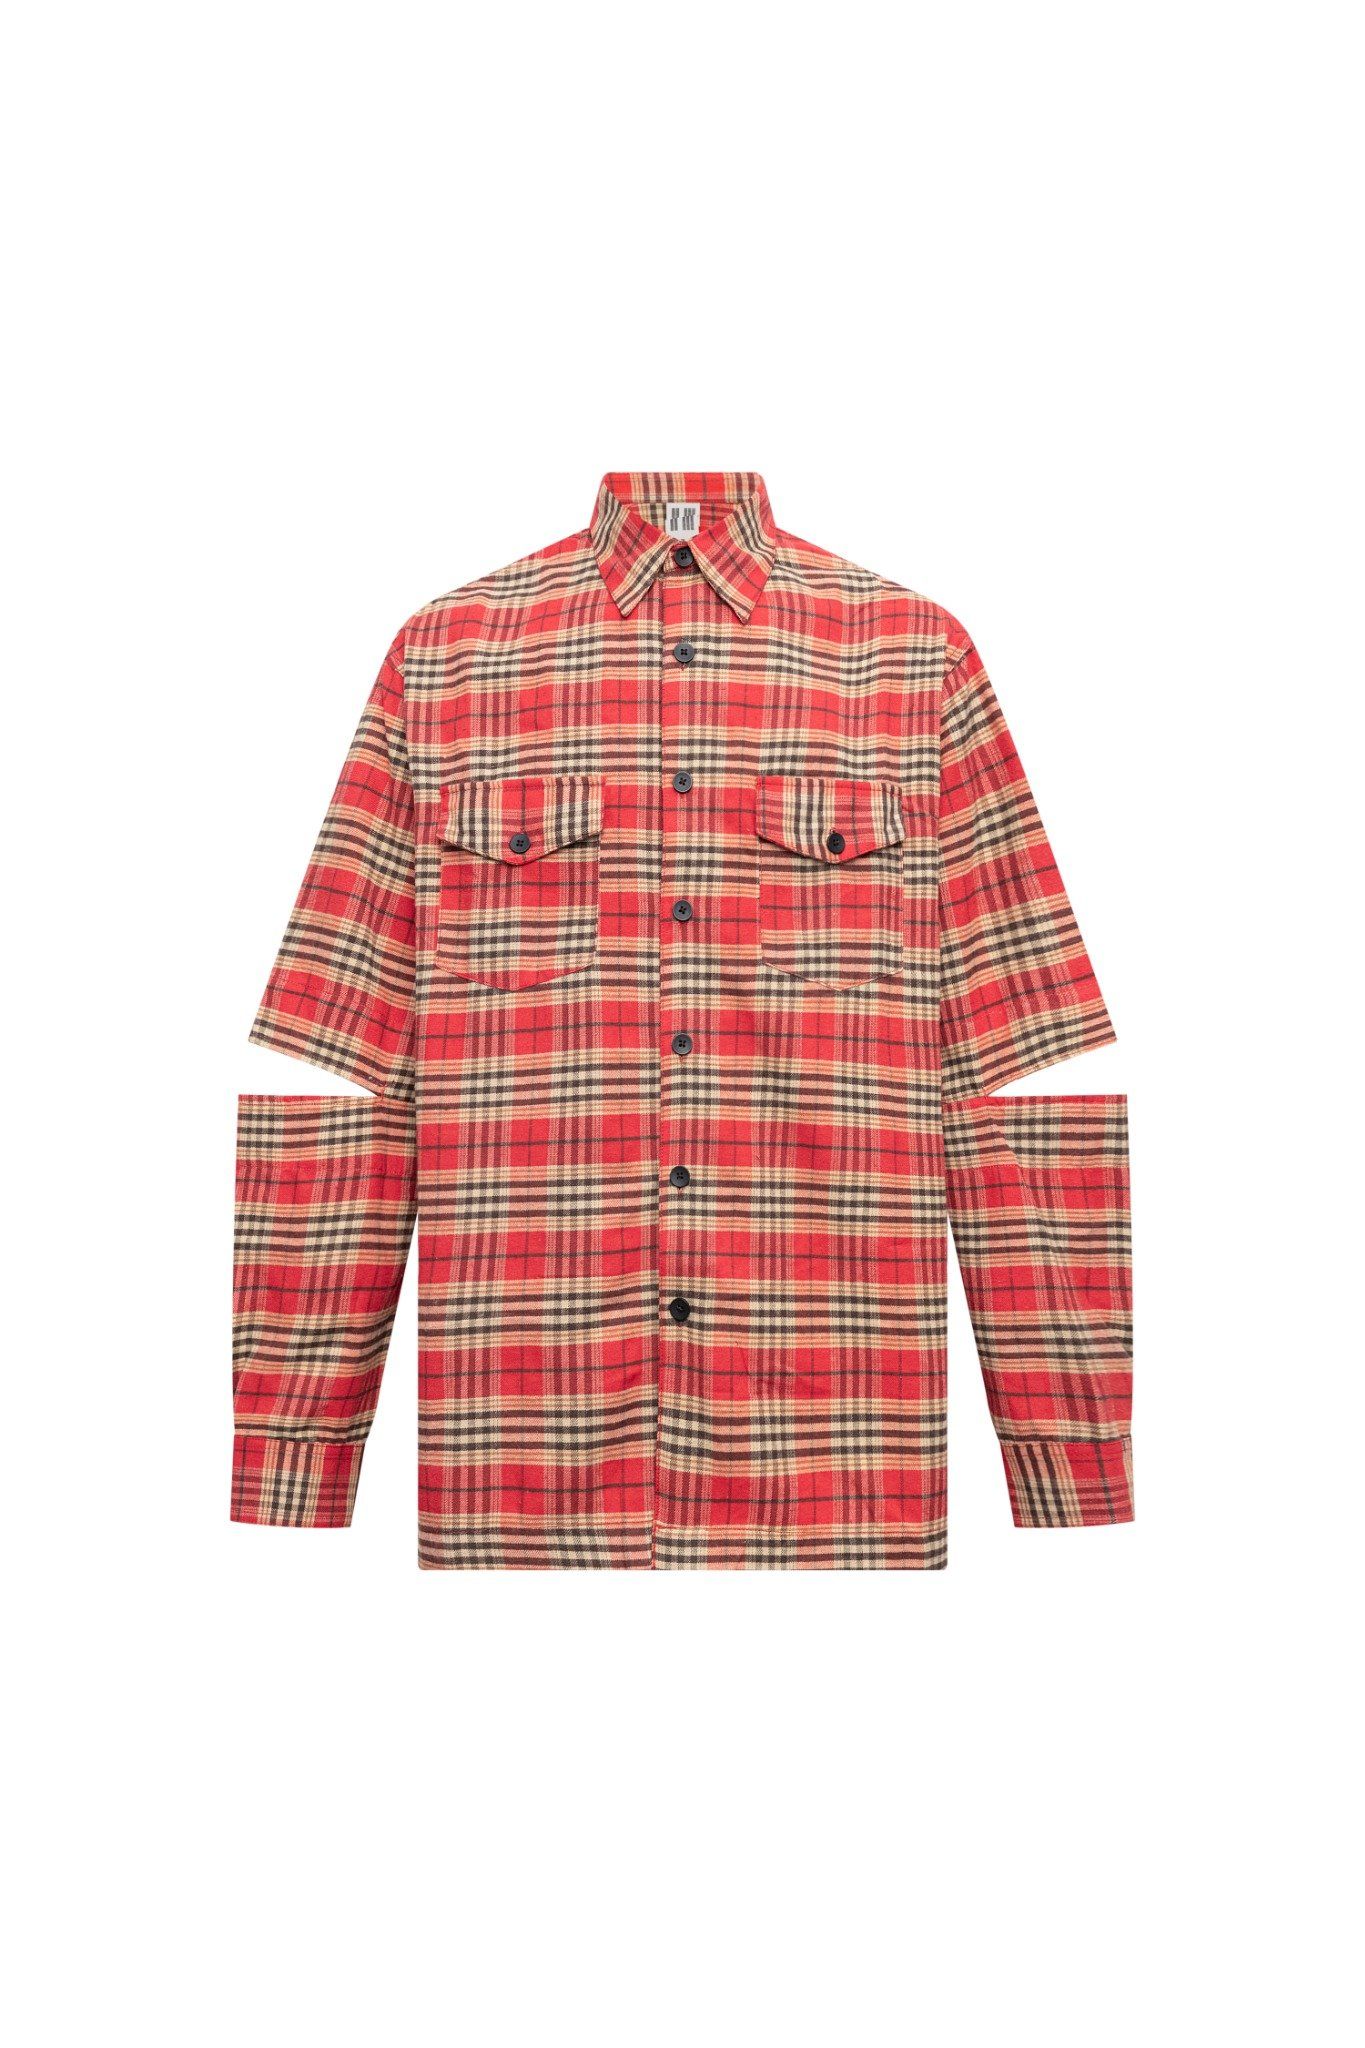  23'CT flannel shirt 